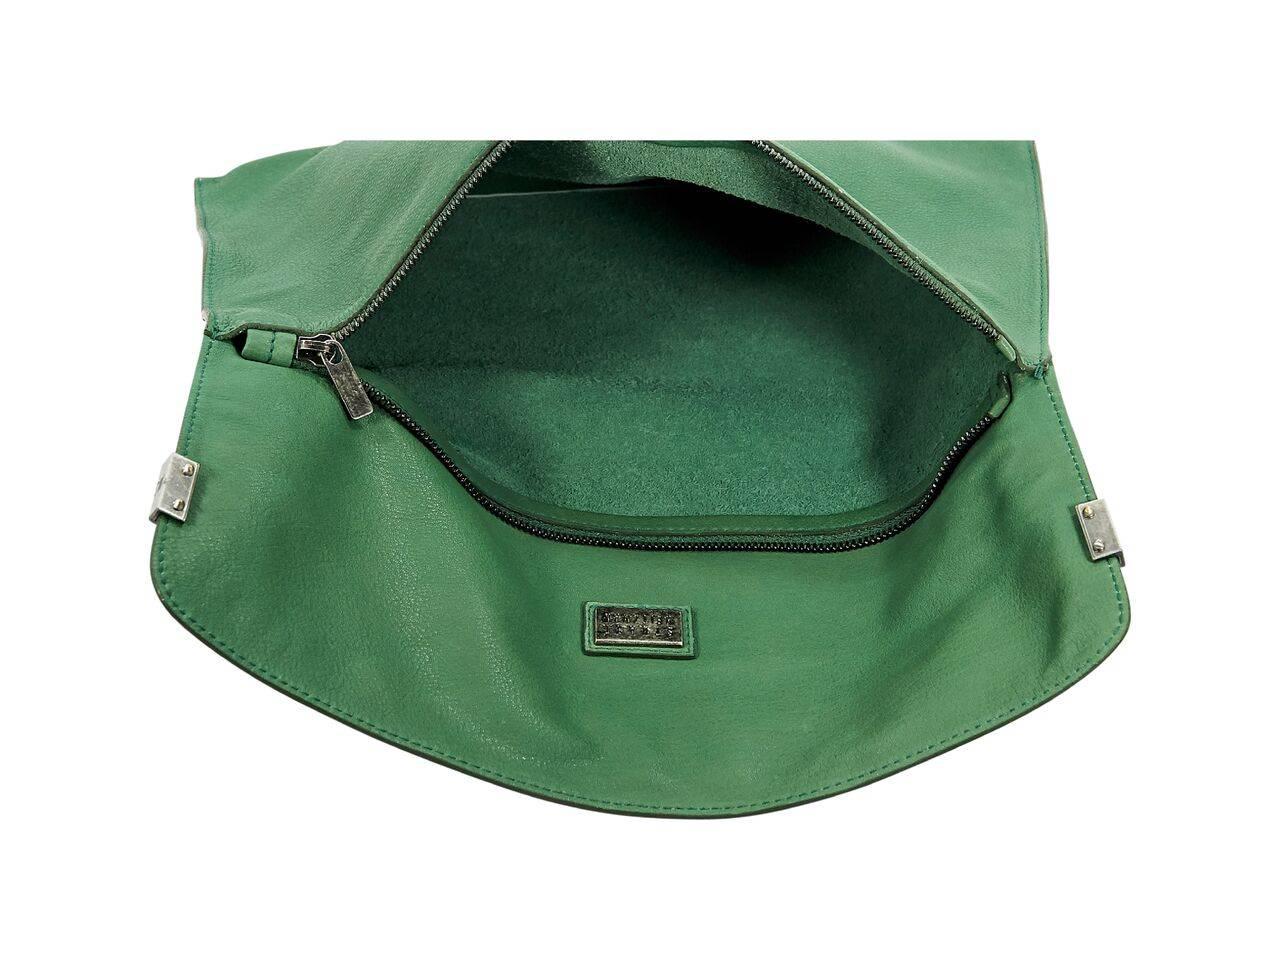 Women's Green Stuart Weitzman Leather Foldover Clutch